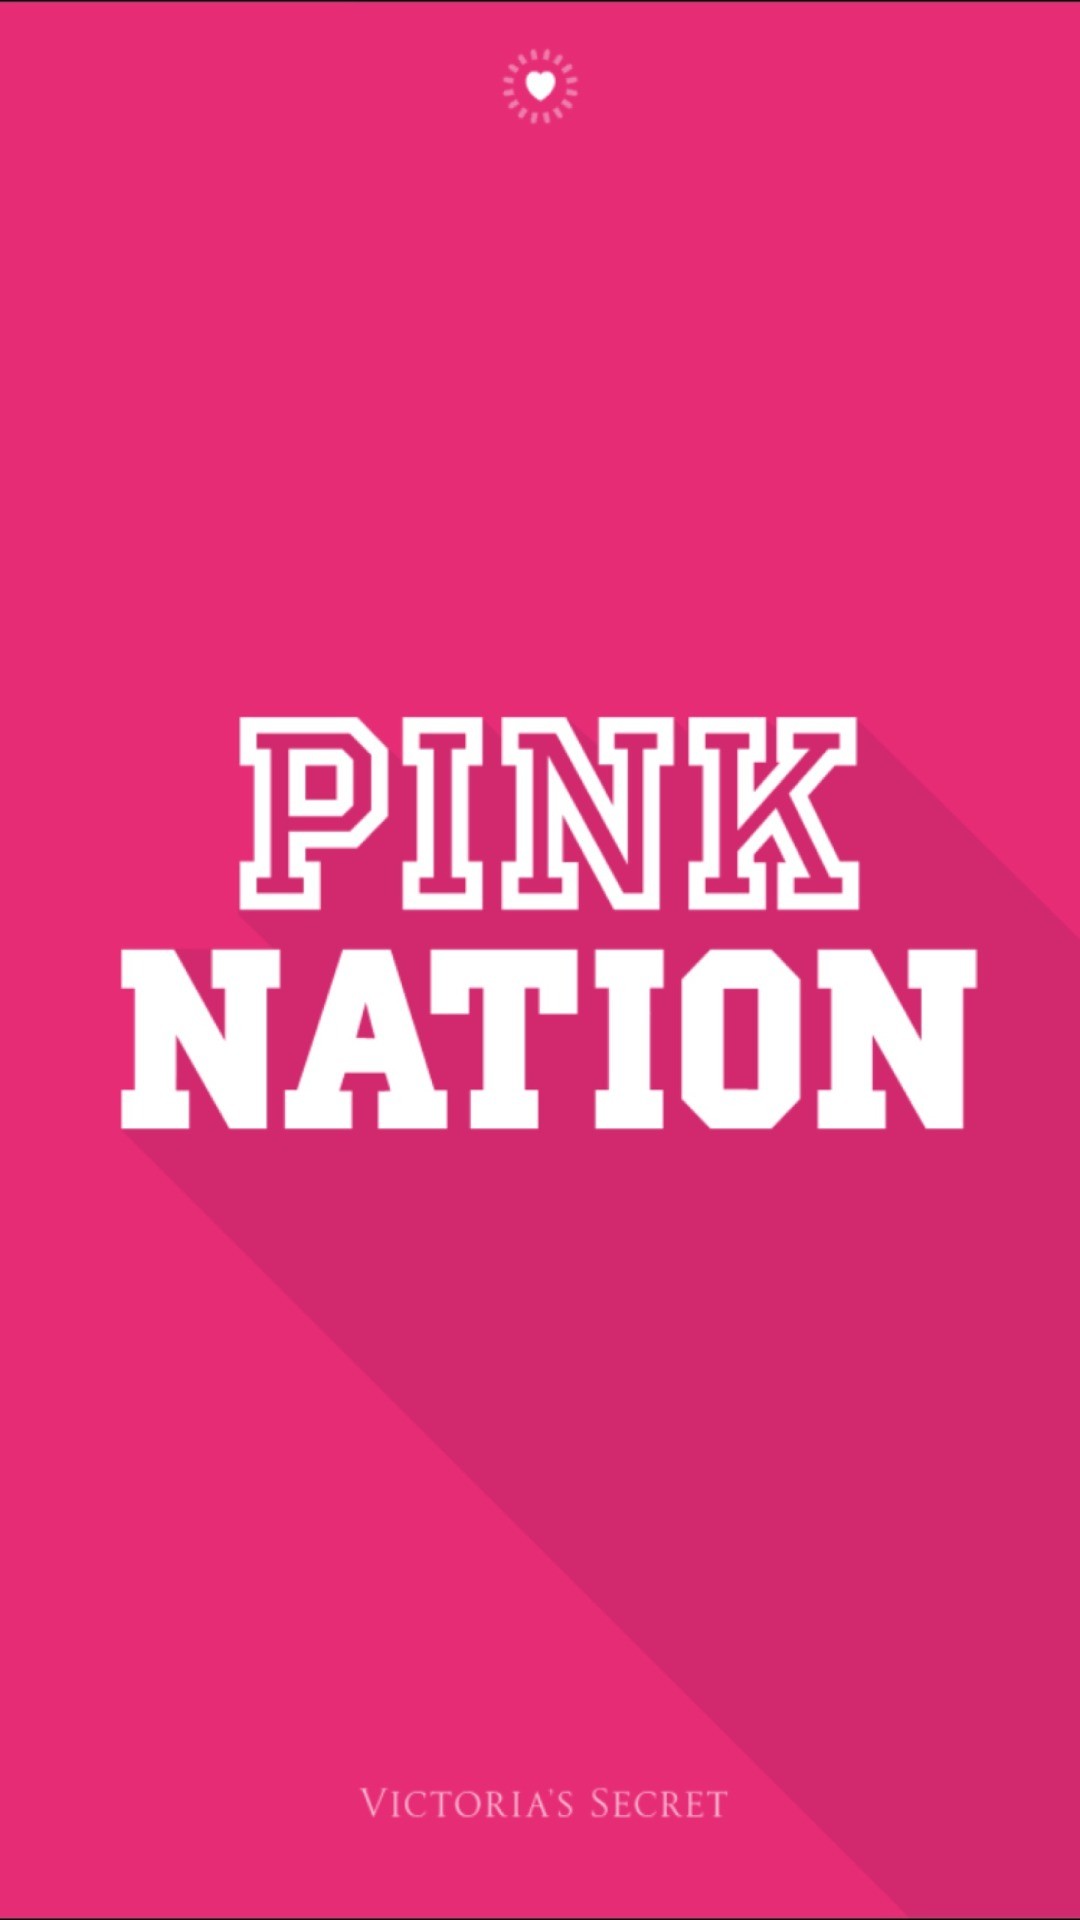 Pink Logo Victorias Secret Wallpaper